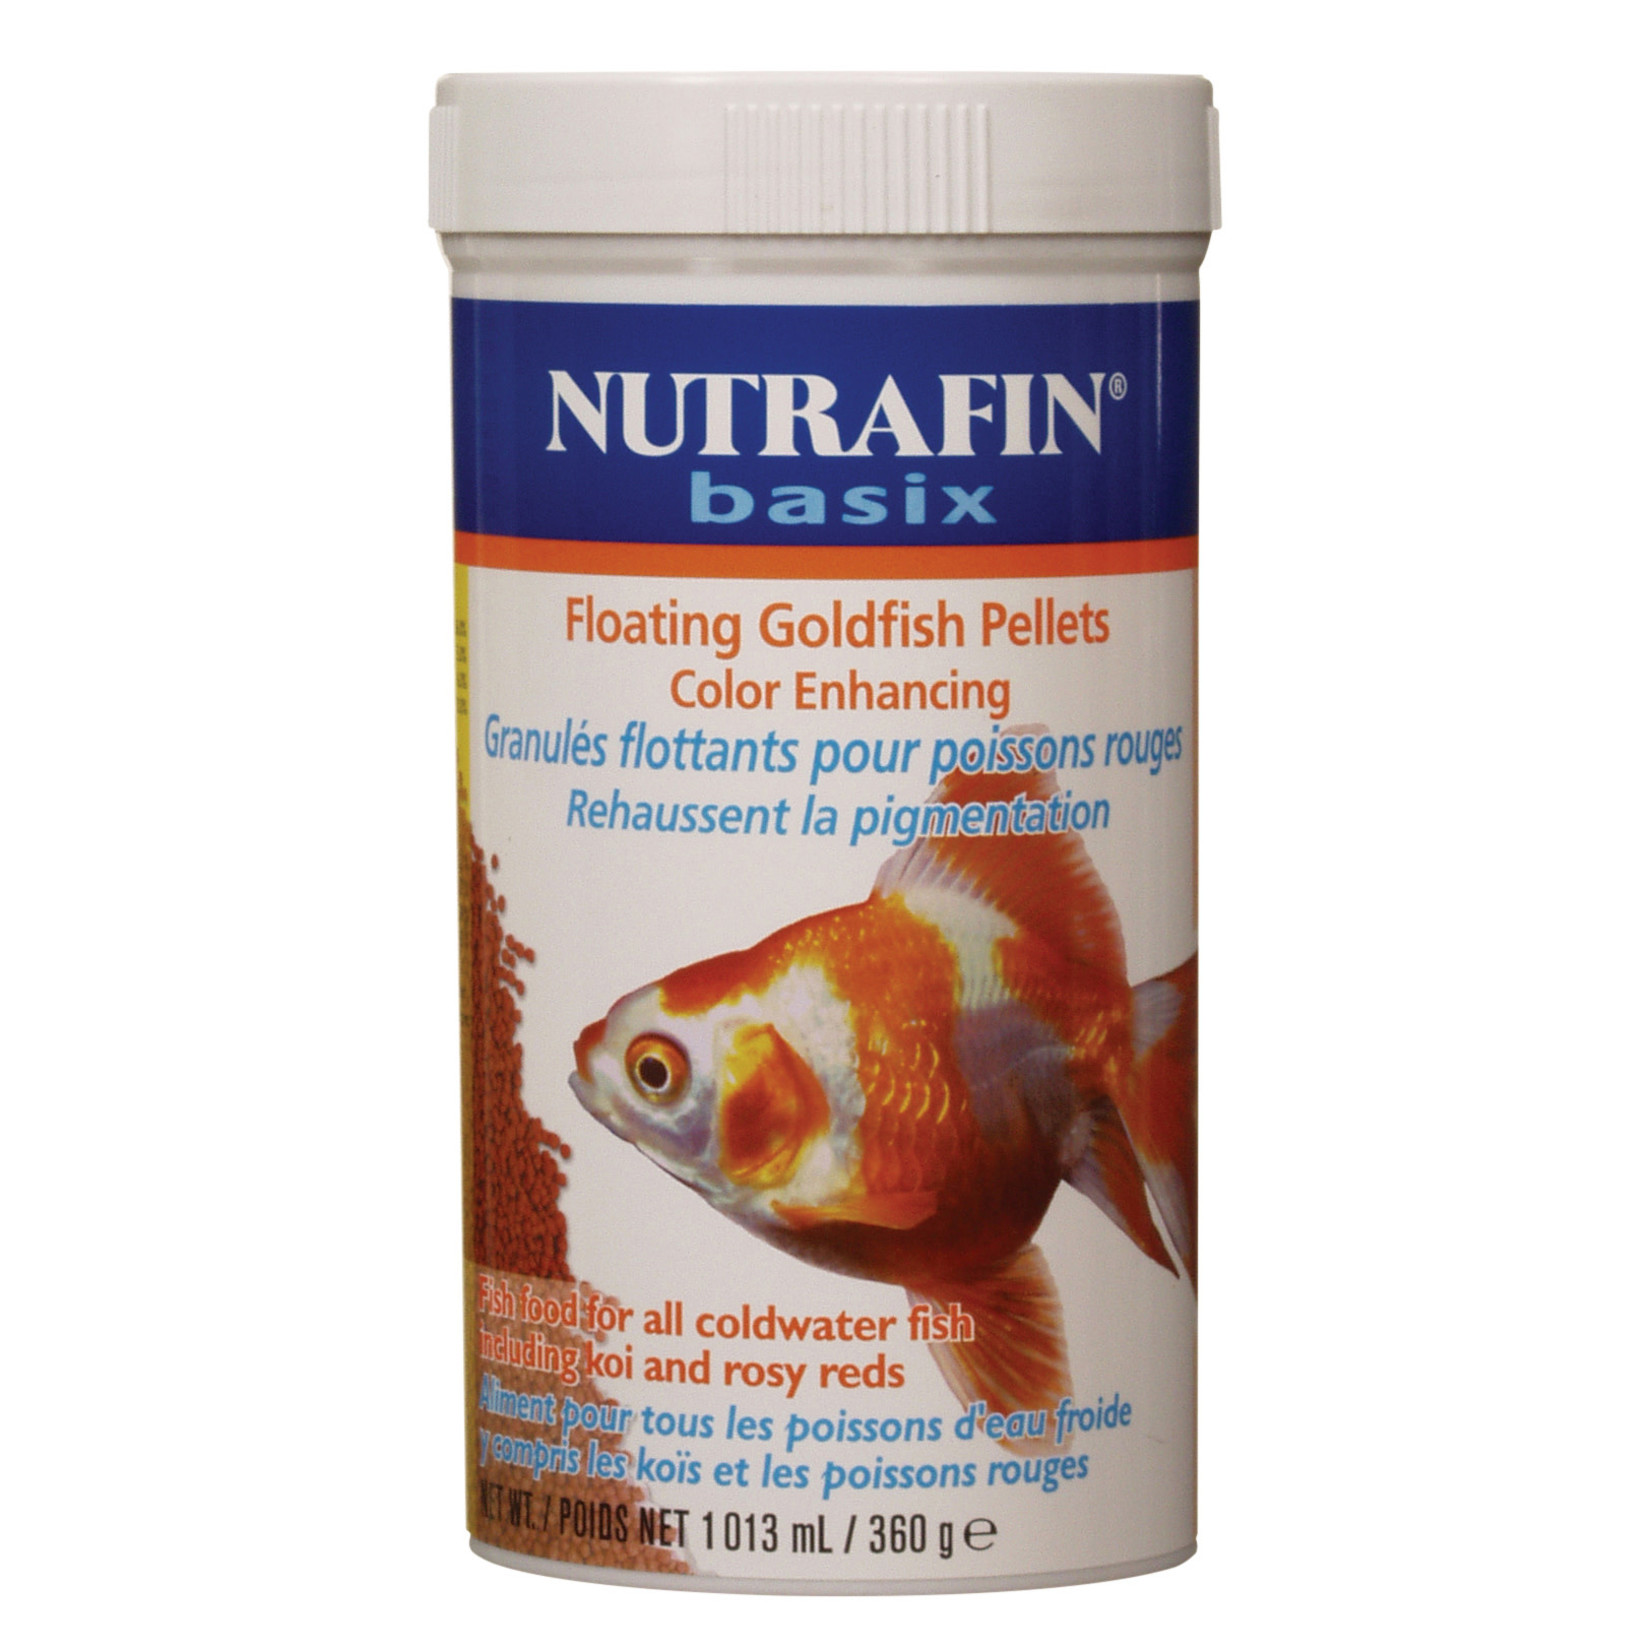 NUTRAFIN (W) Nutrafin basix Floating Goldfish Pellets, 360 g (12.7 oz)